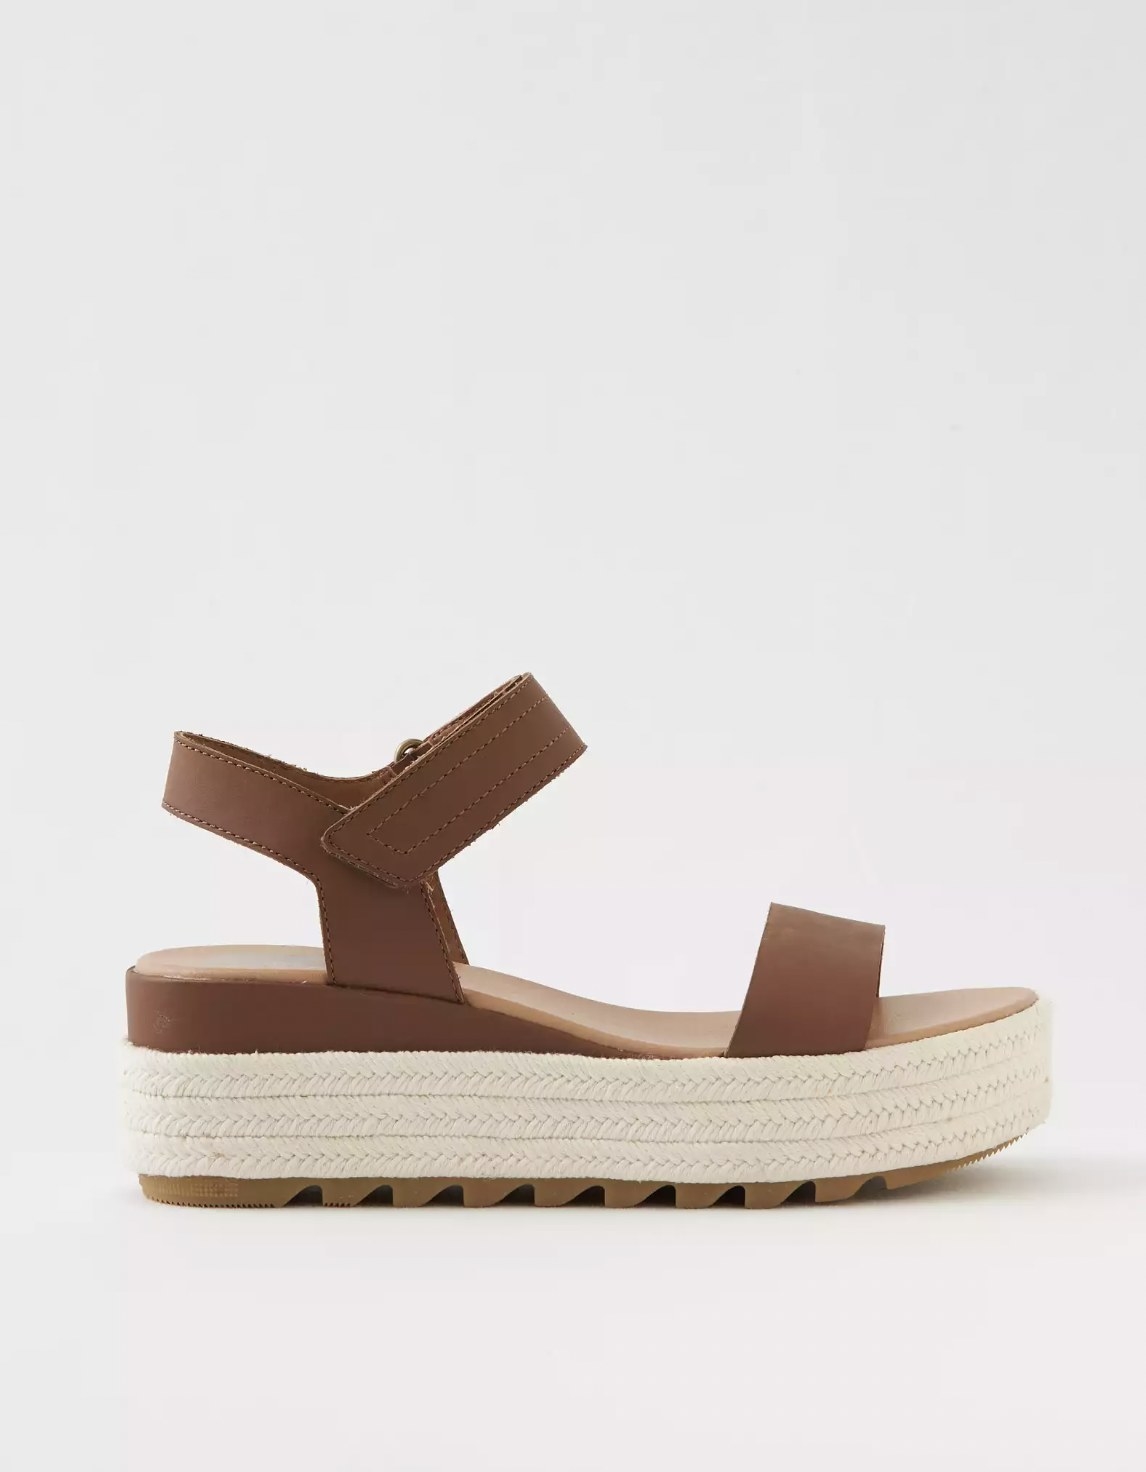 The tan two strap platform sandals